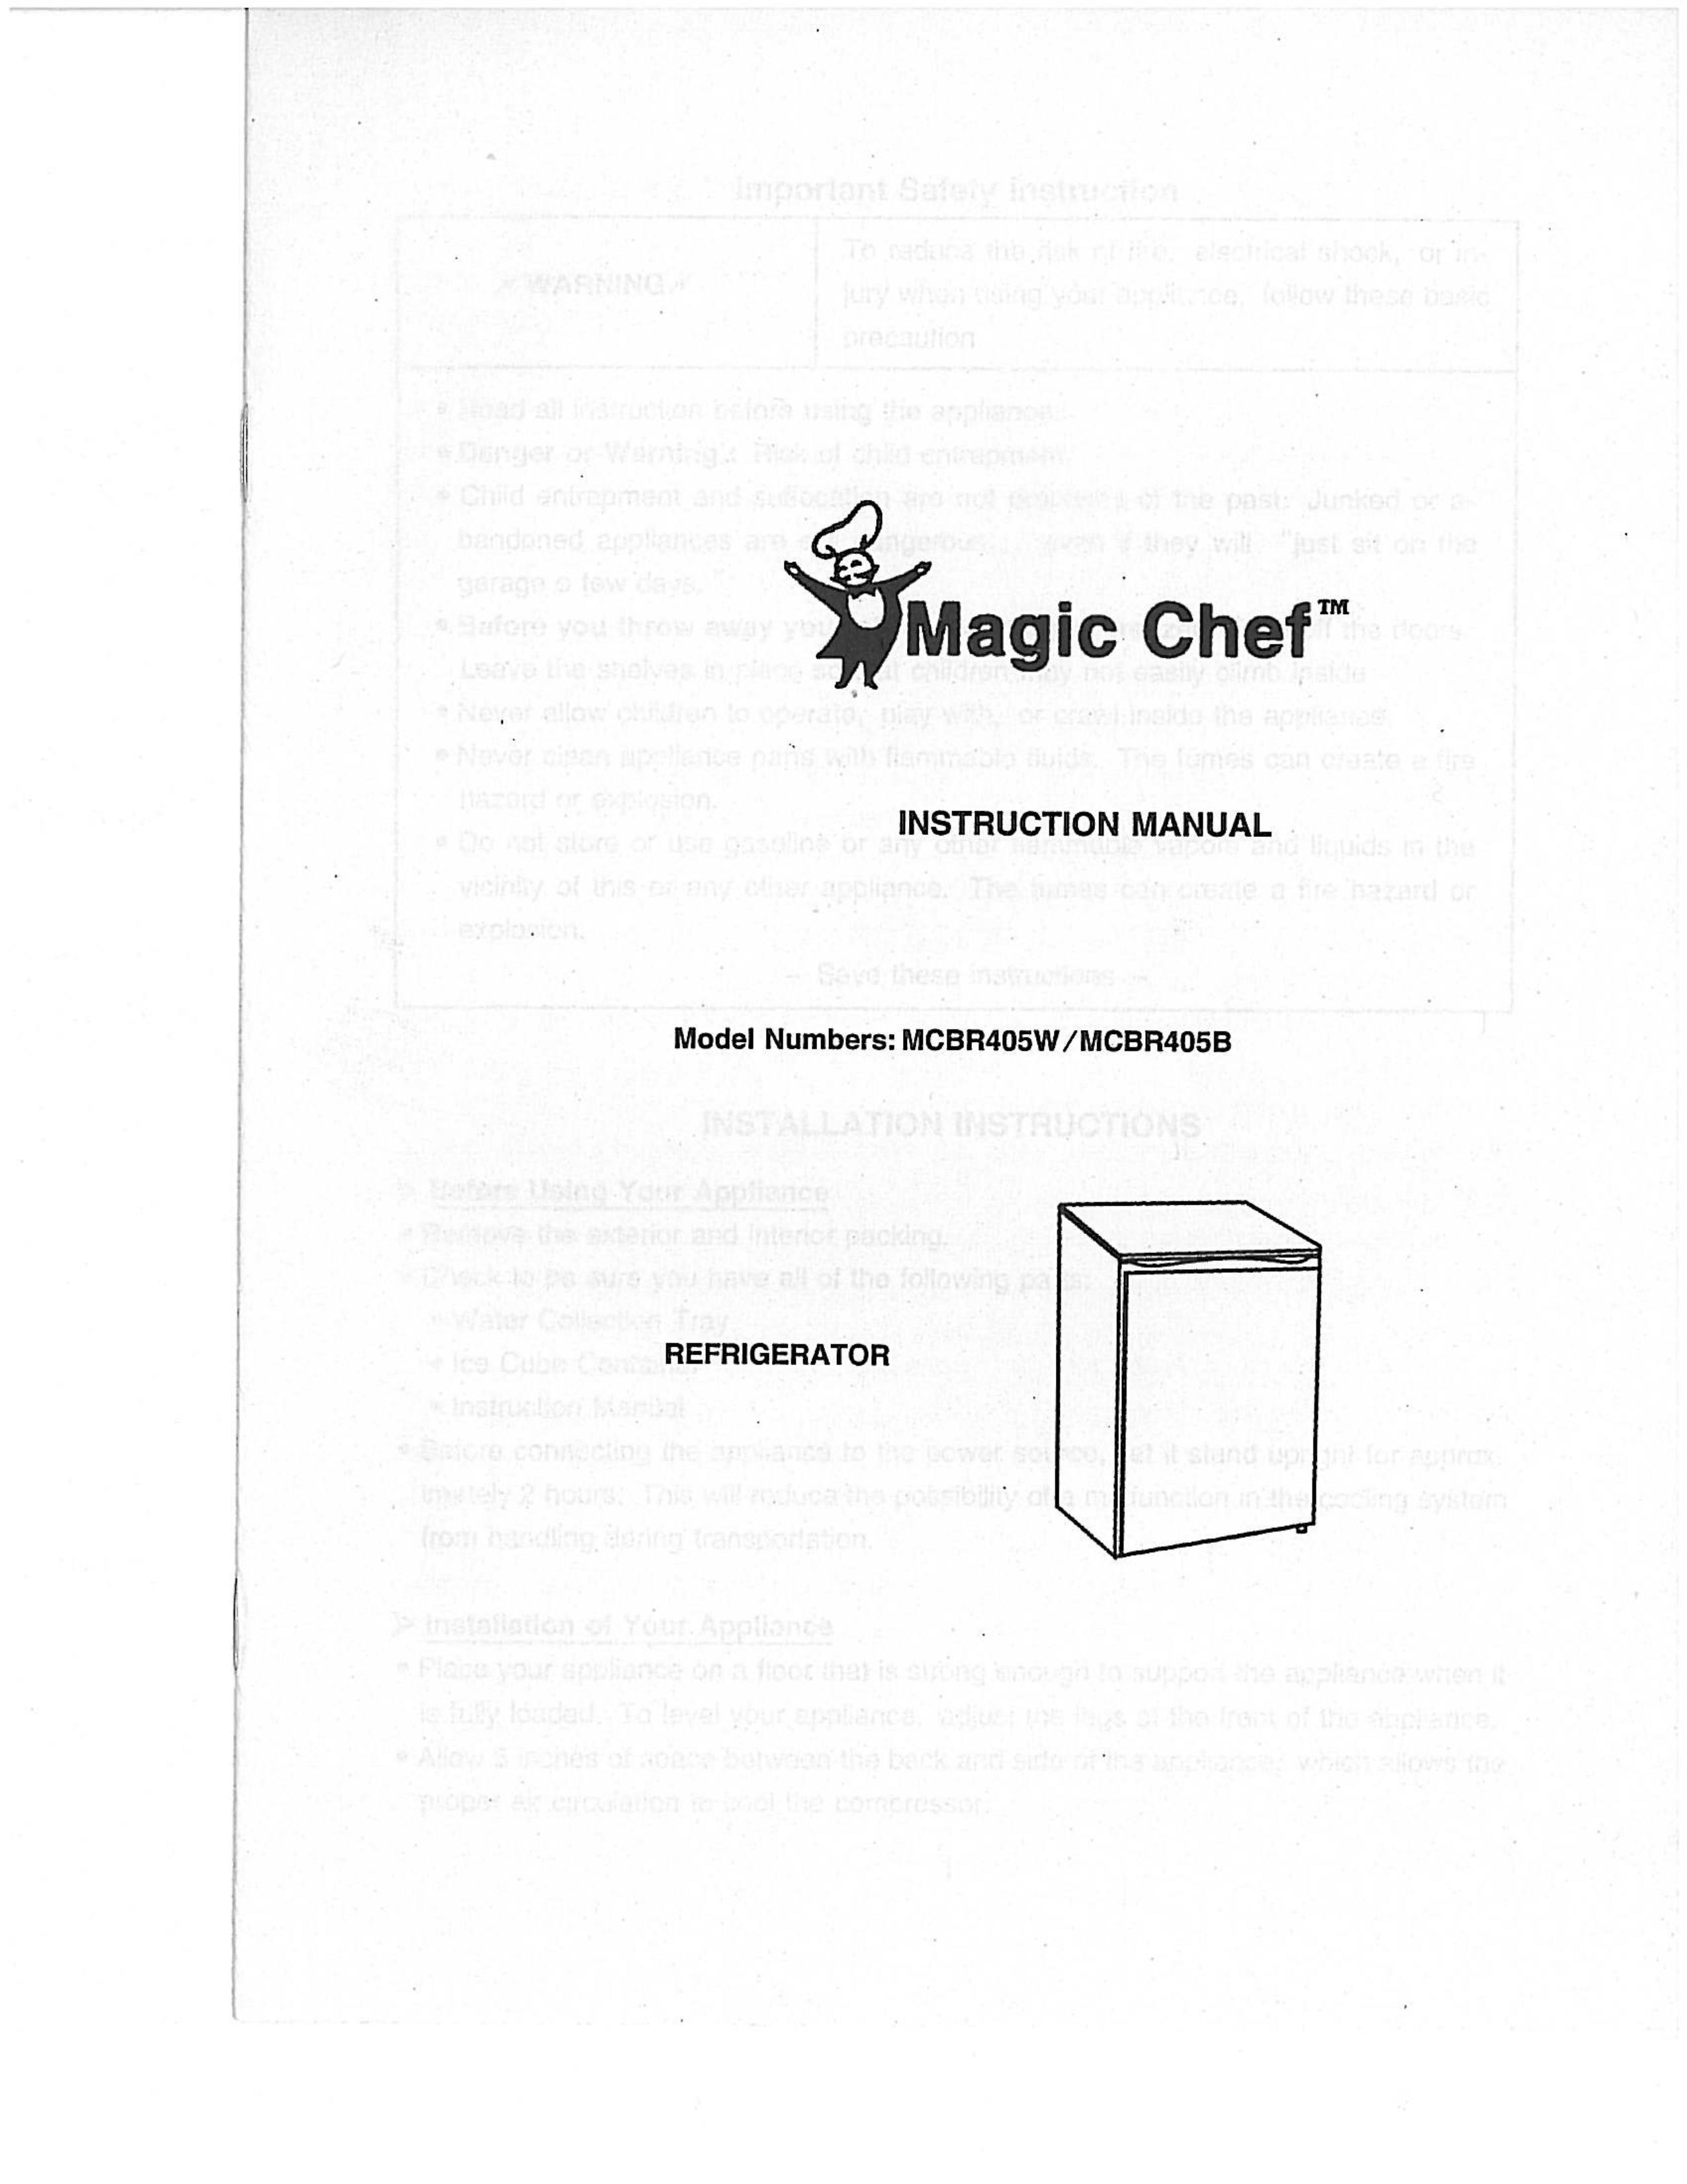 Magic Chef MCBR405B Refrigerator User Manual